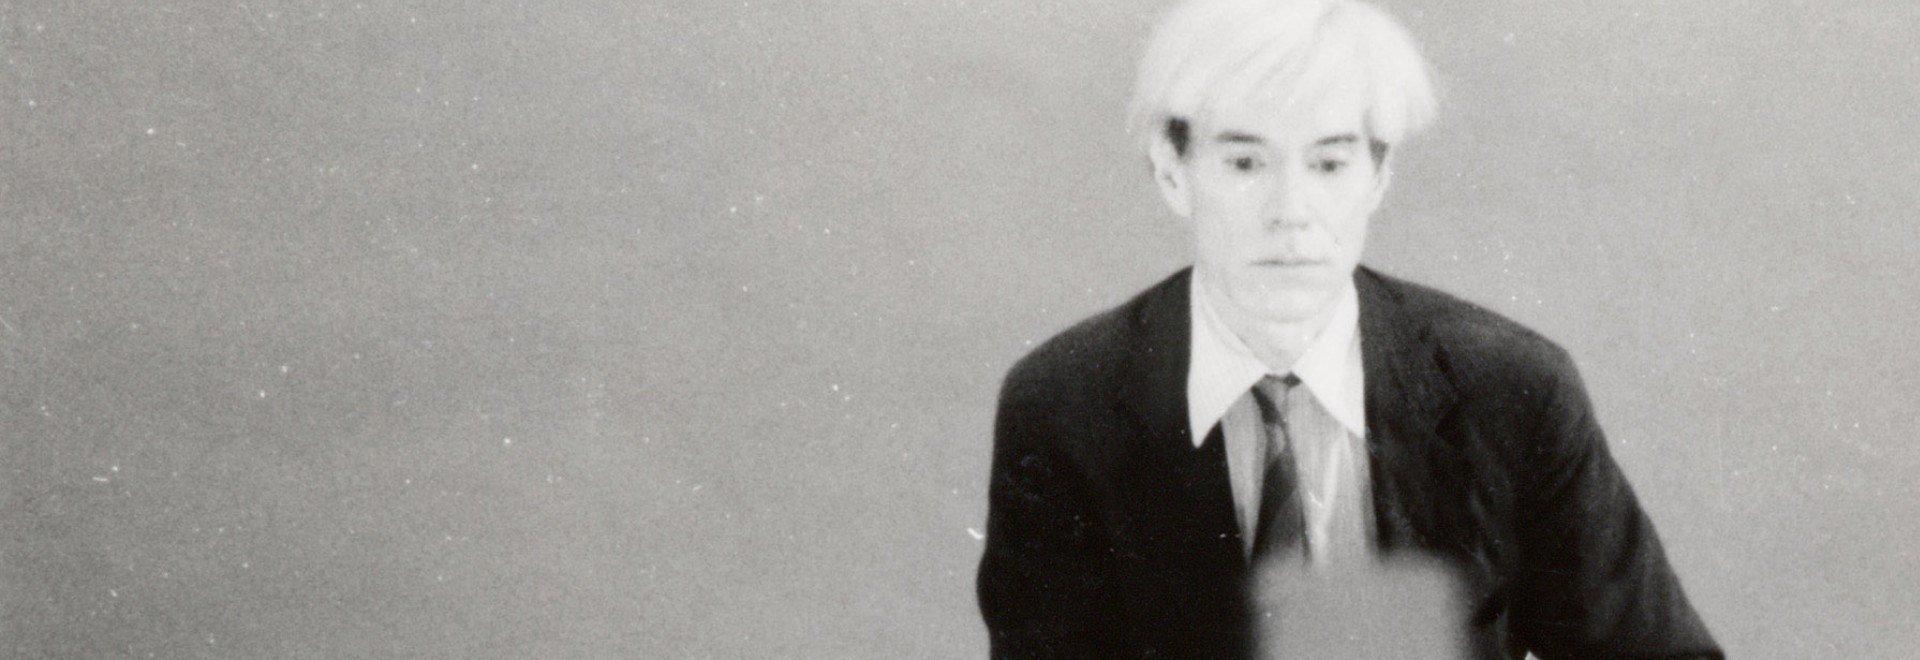 Andy Warhol - Un ritratto